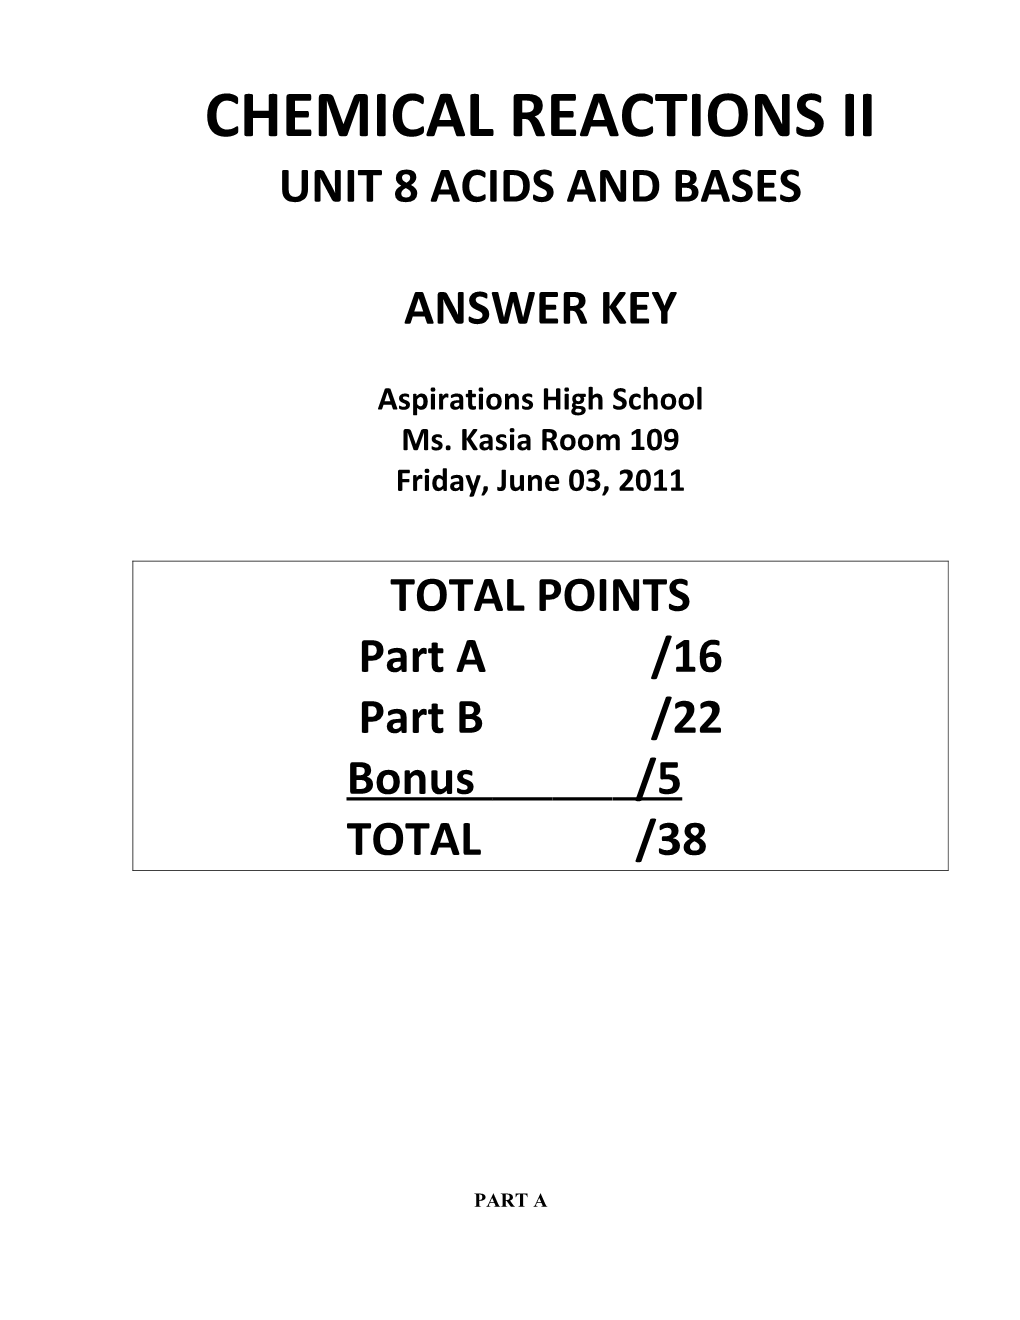 Unit 8 Acids and Bases